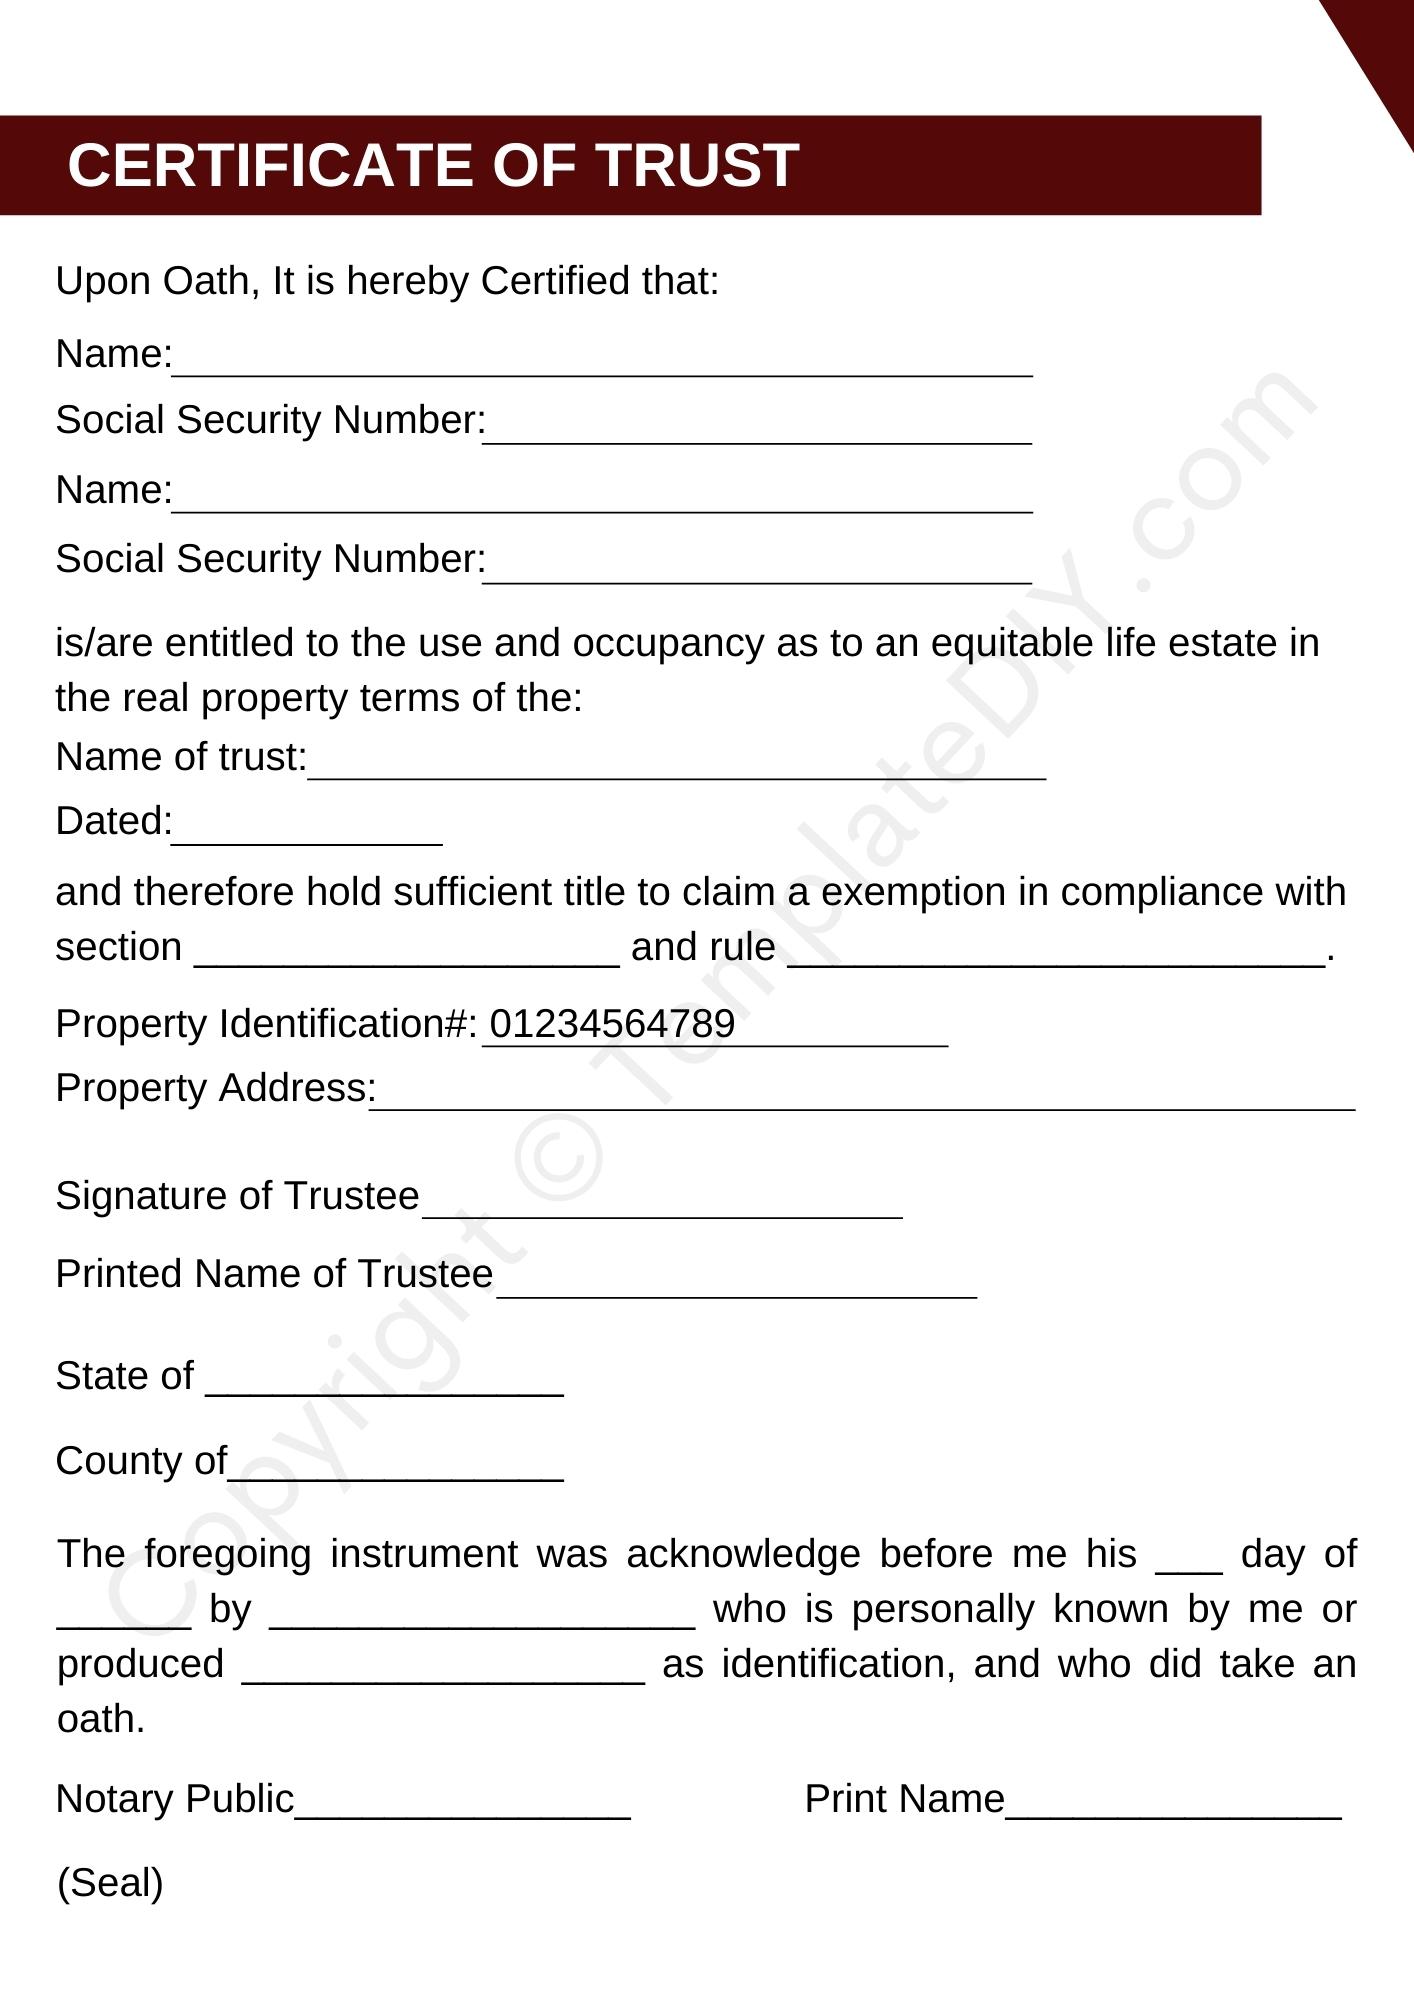 Certificate of Trust Template